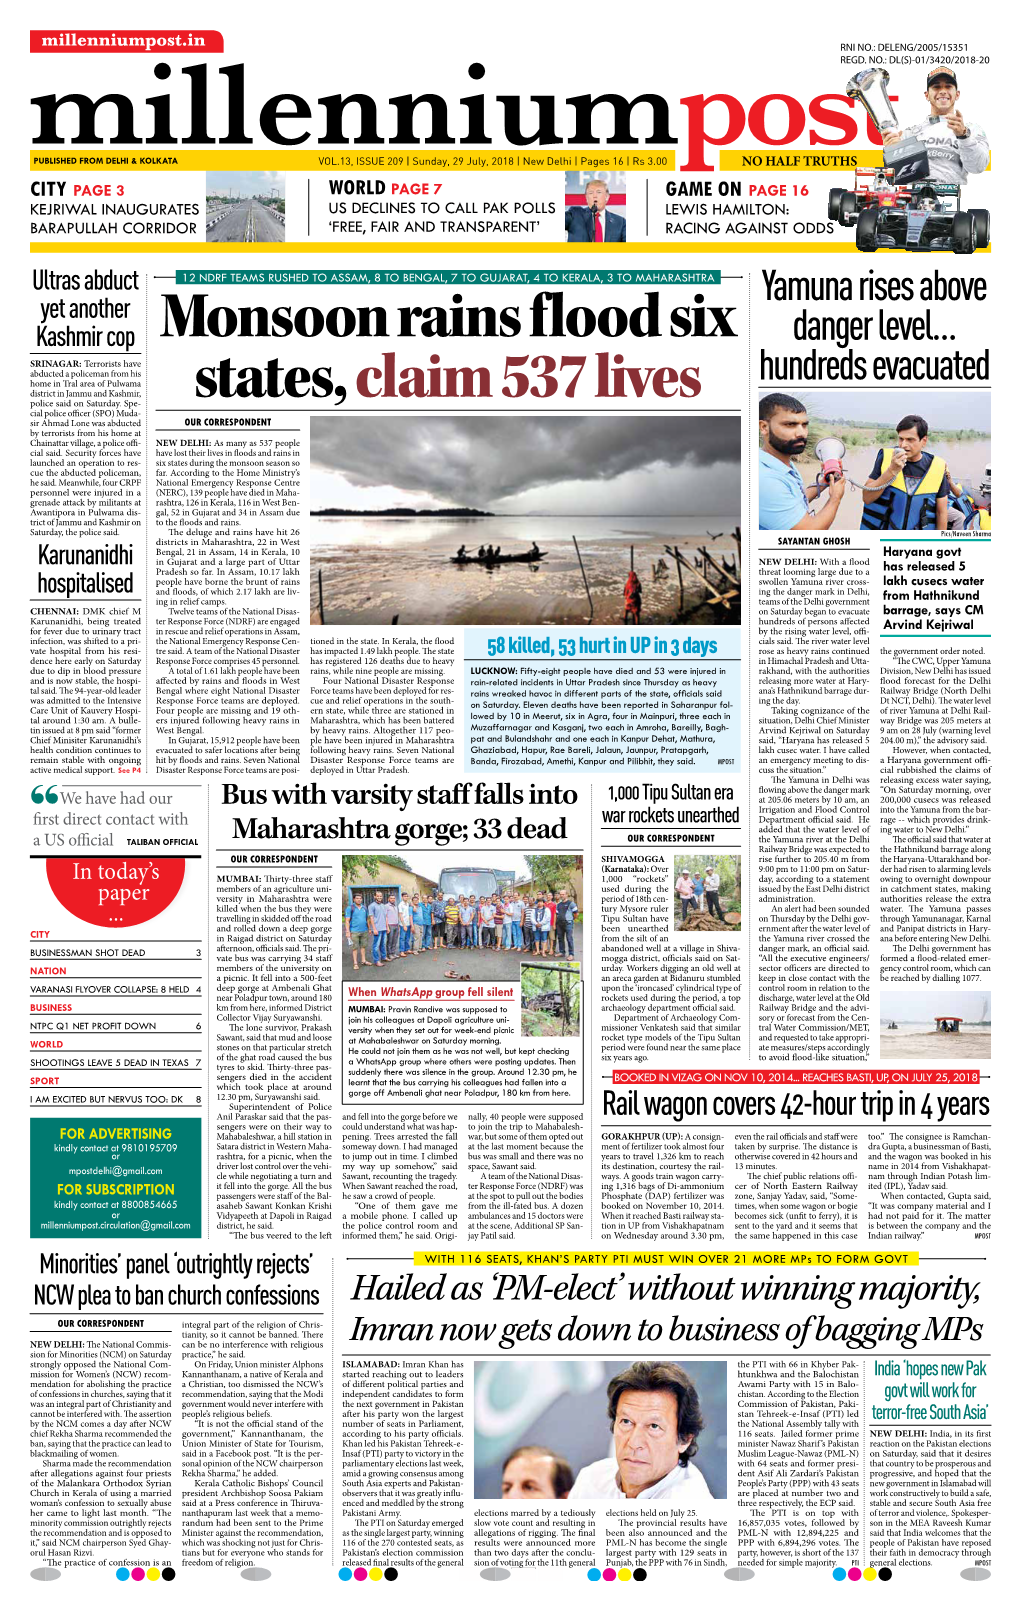 Monsoon Rains Flood Six States, Claim 537 Lives